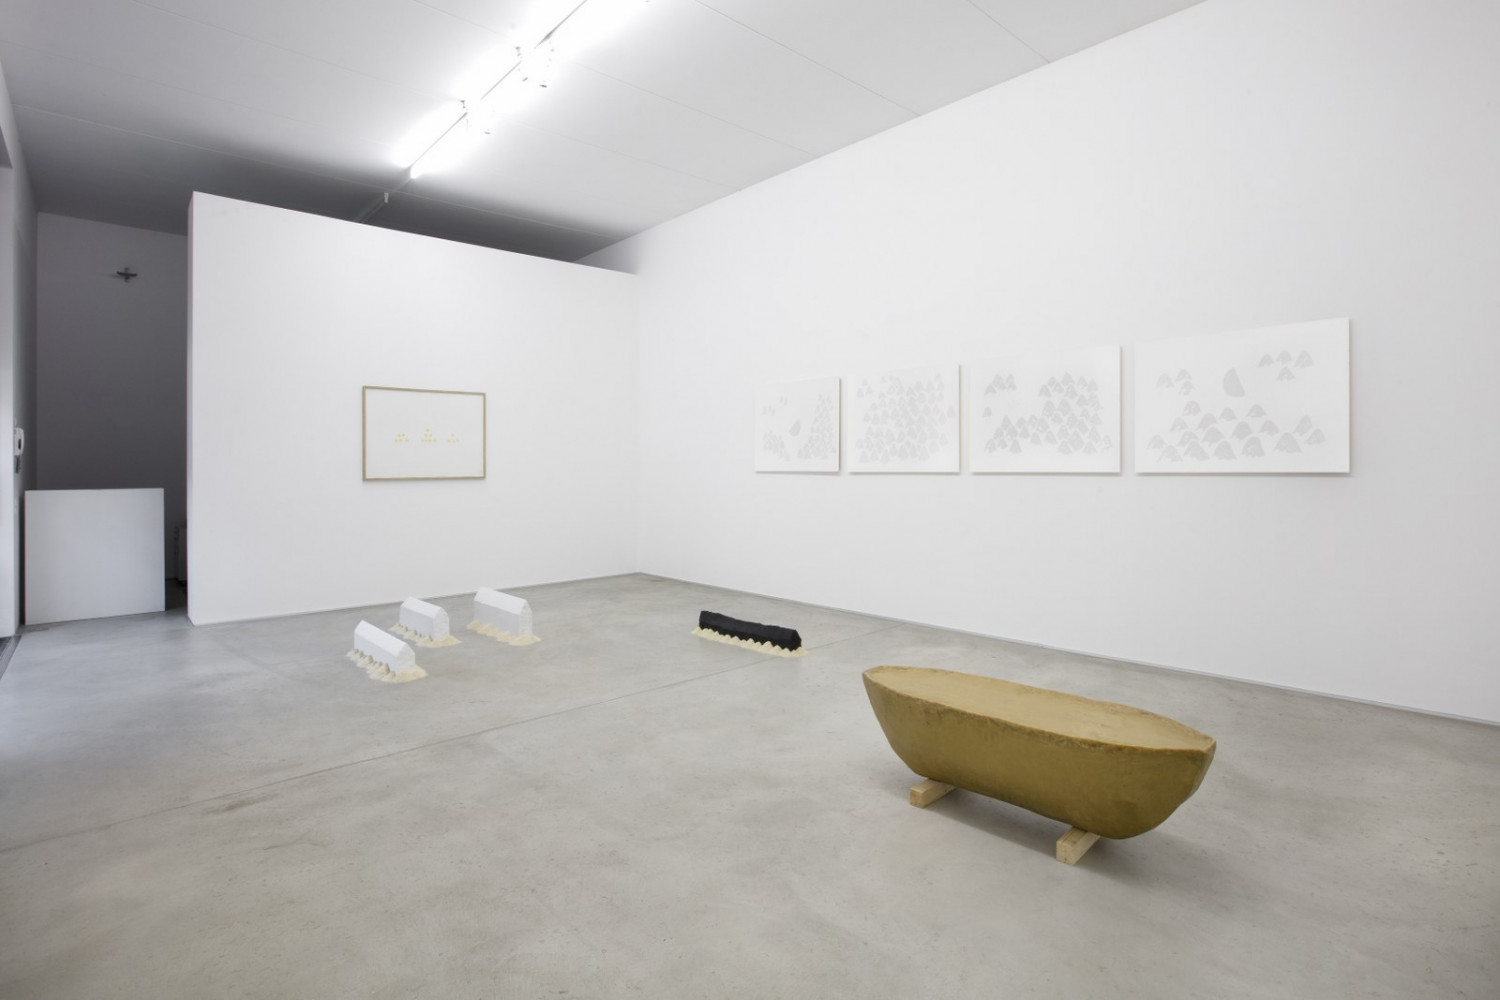 Wolfgang Laib, ‘New installation’, Installation view, Buchmann Agra, 2017